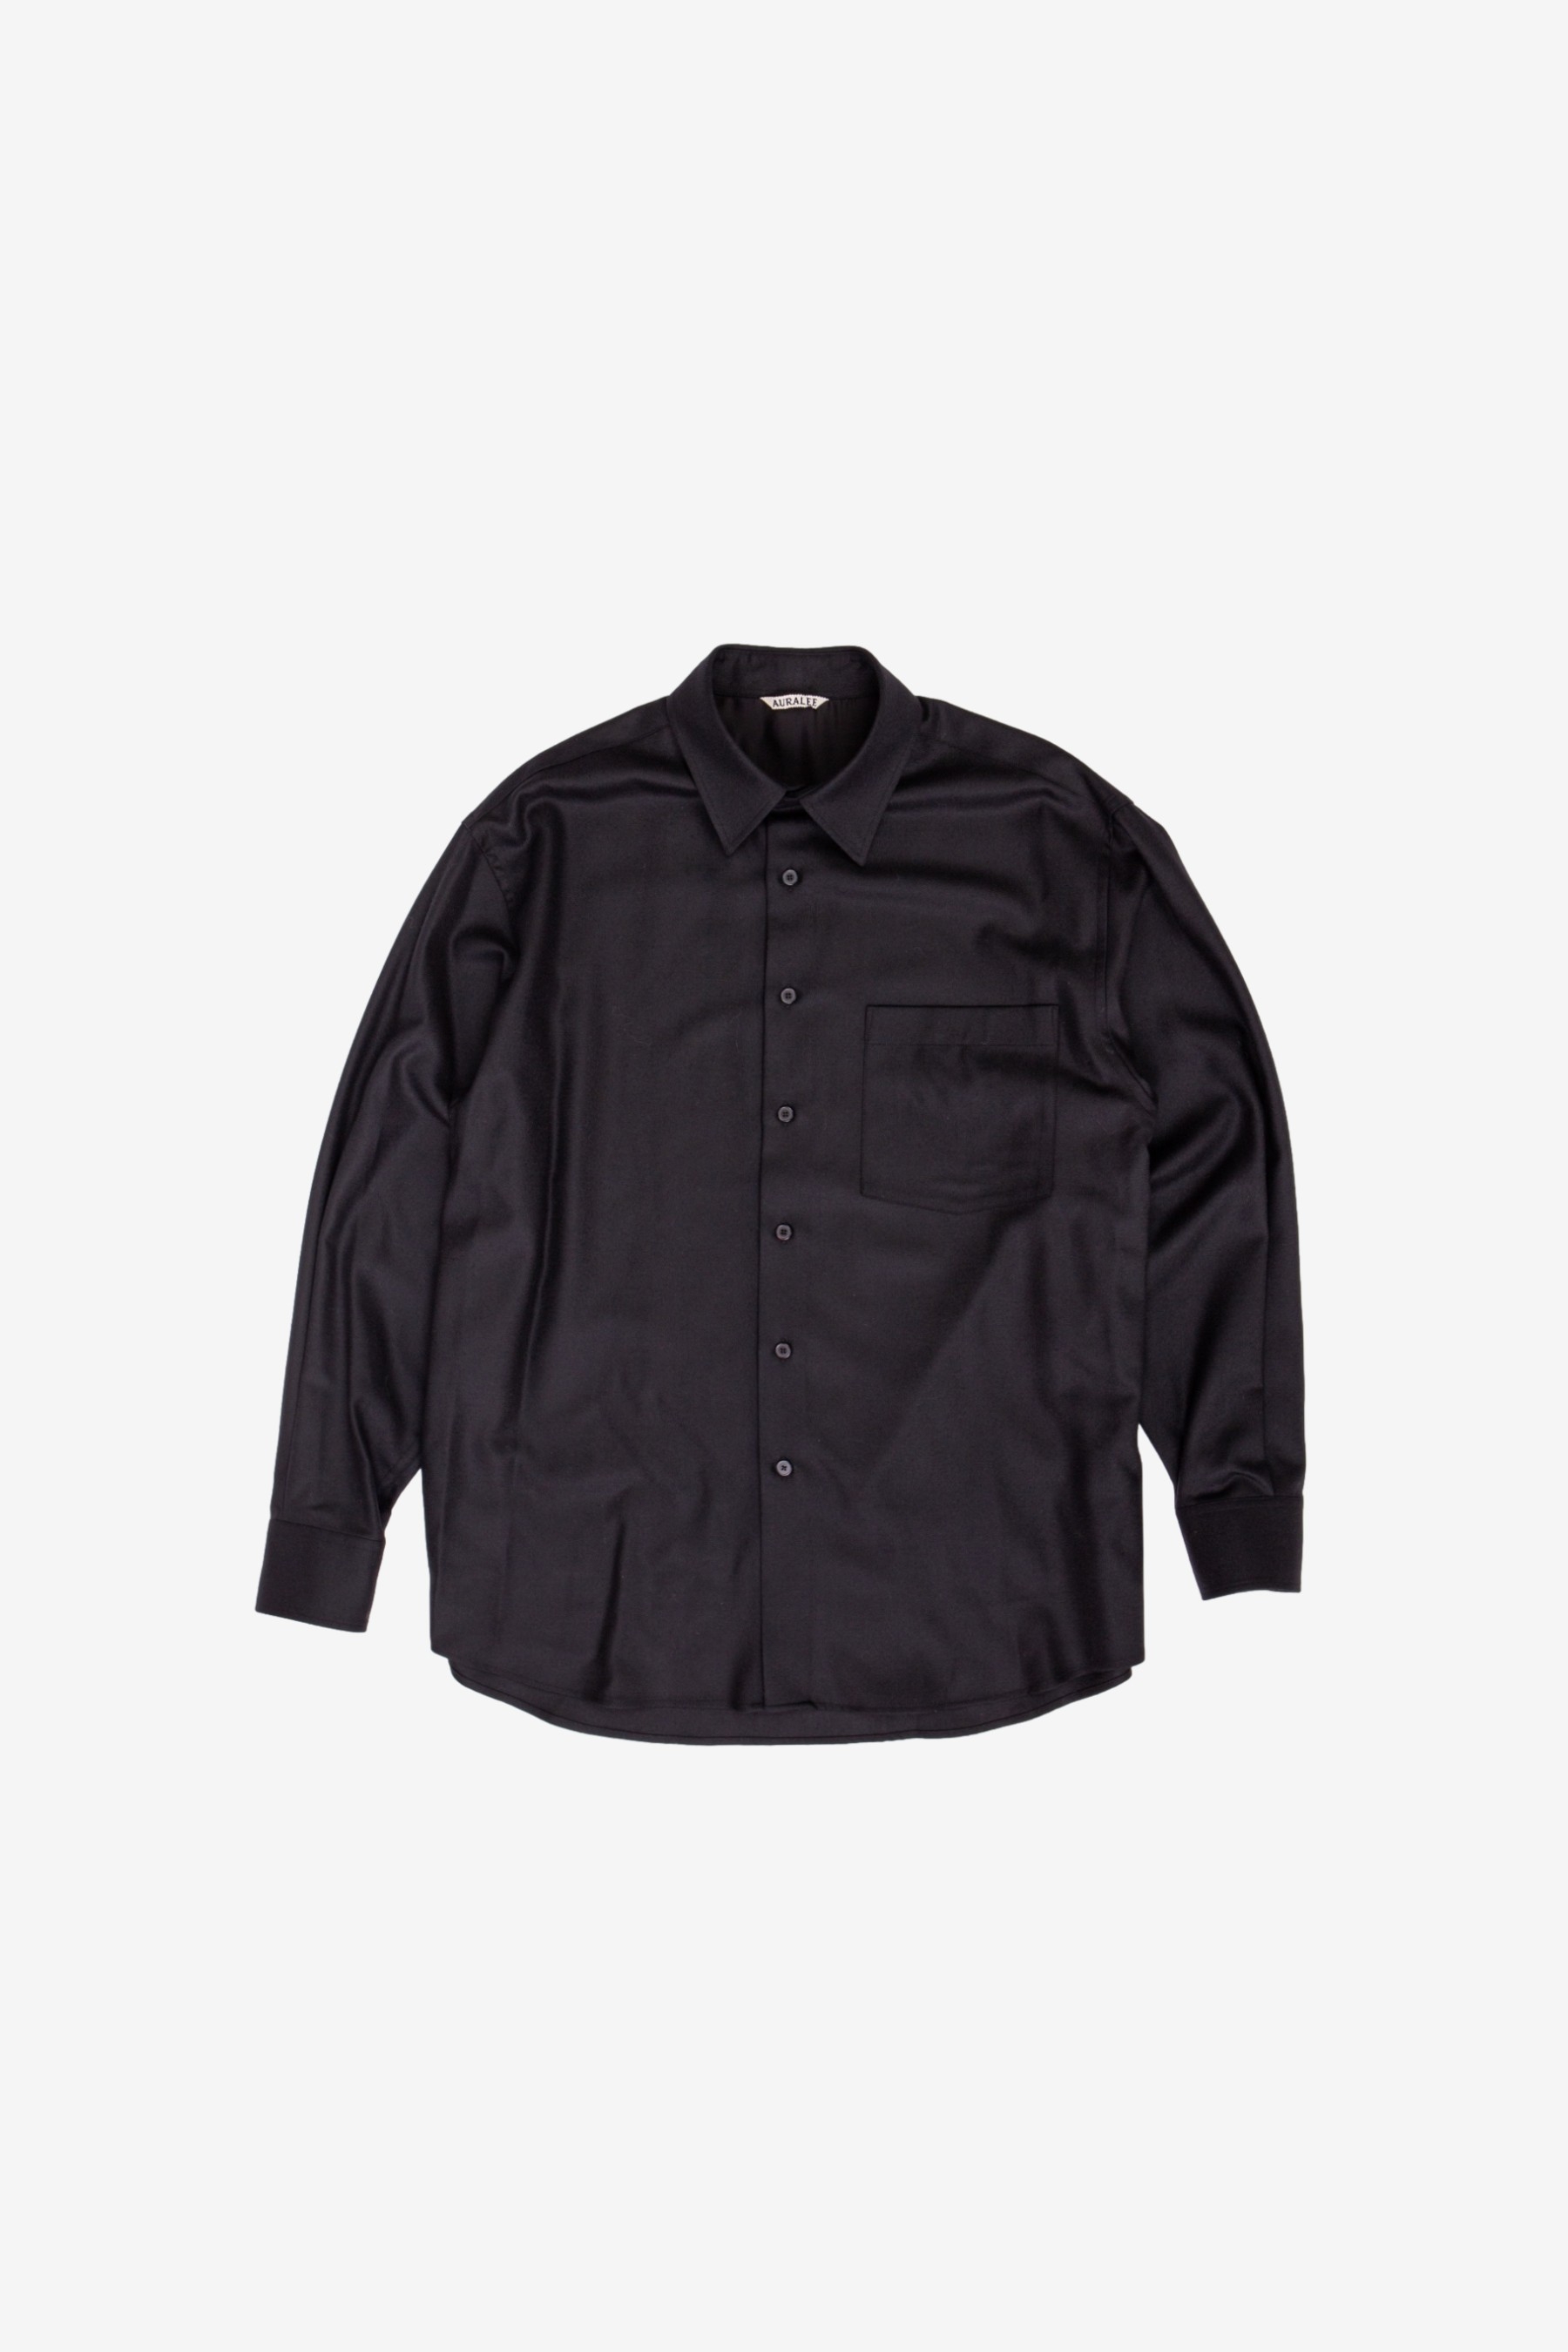 Super Light Wool Shirt in Black - Auralee | Afura Store